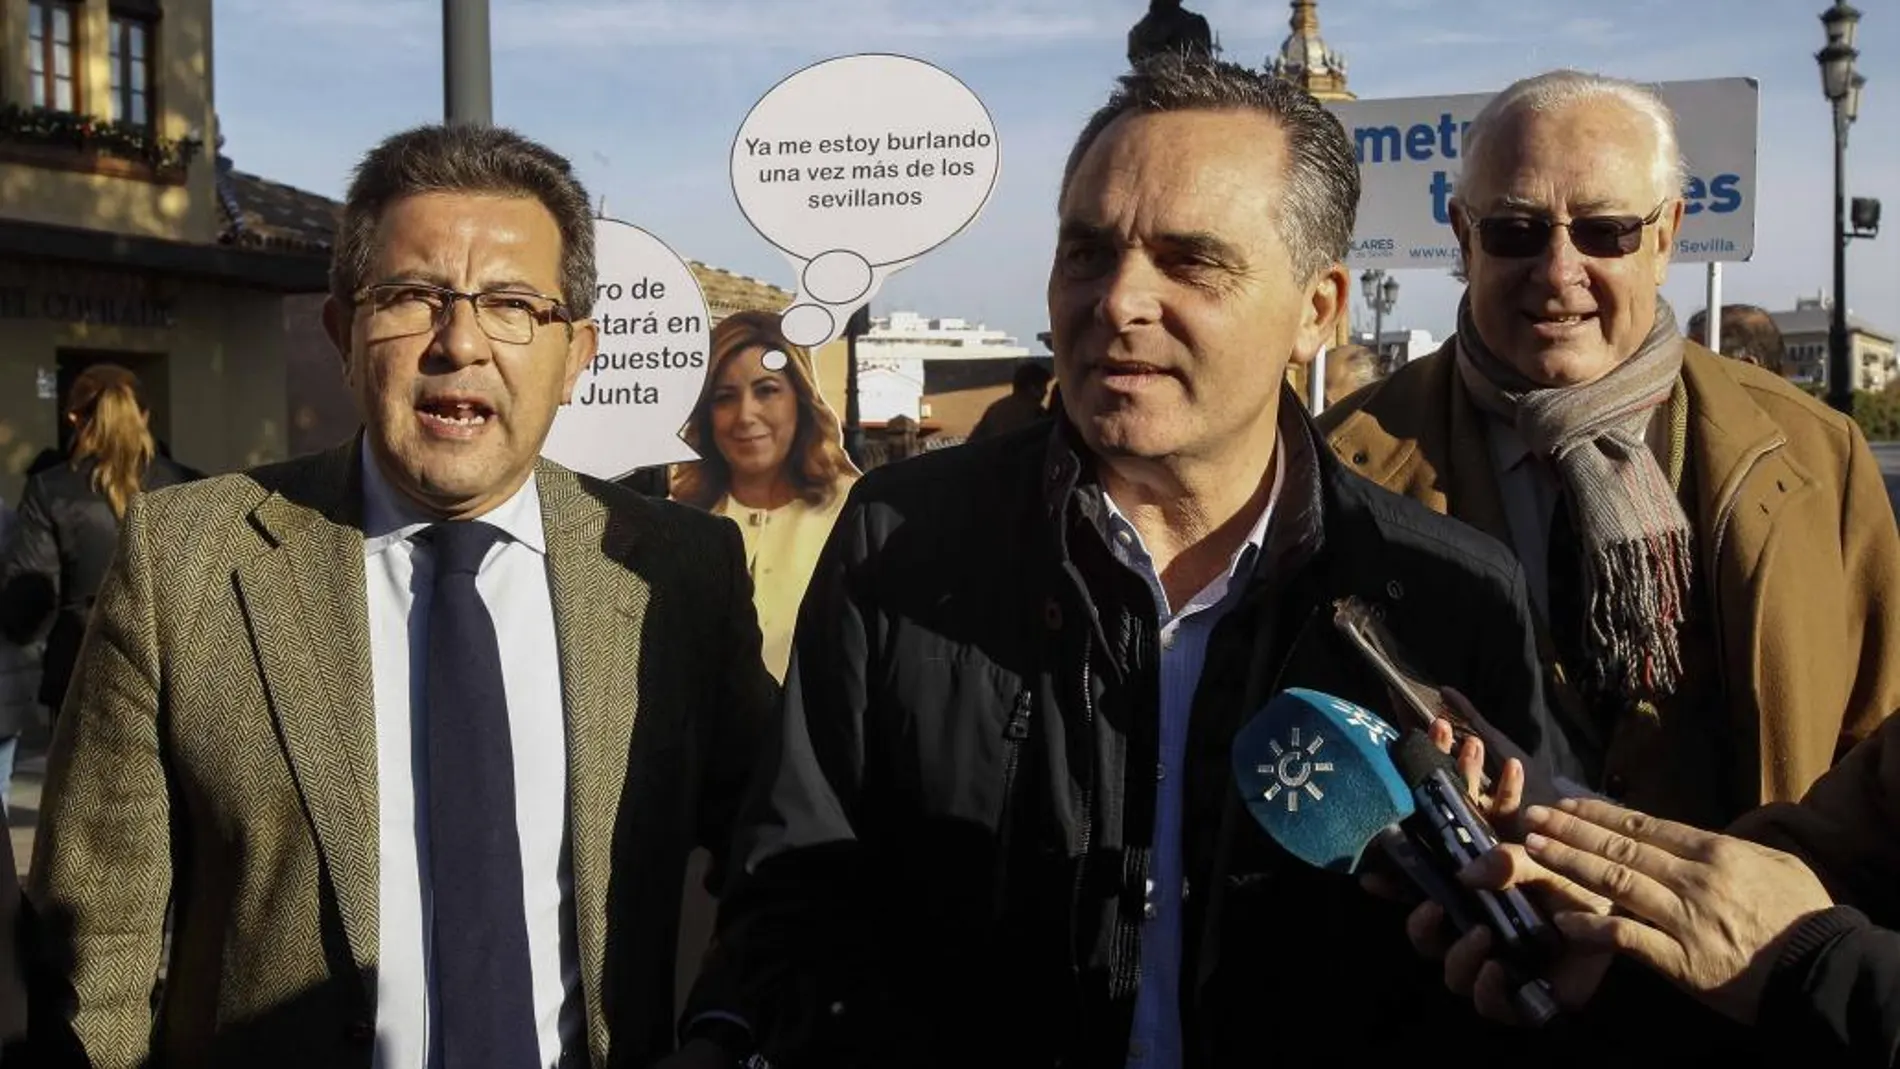 El PP critica la “cruzada” de Díaz contra la concertada